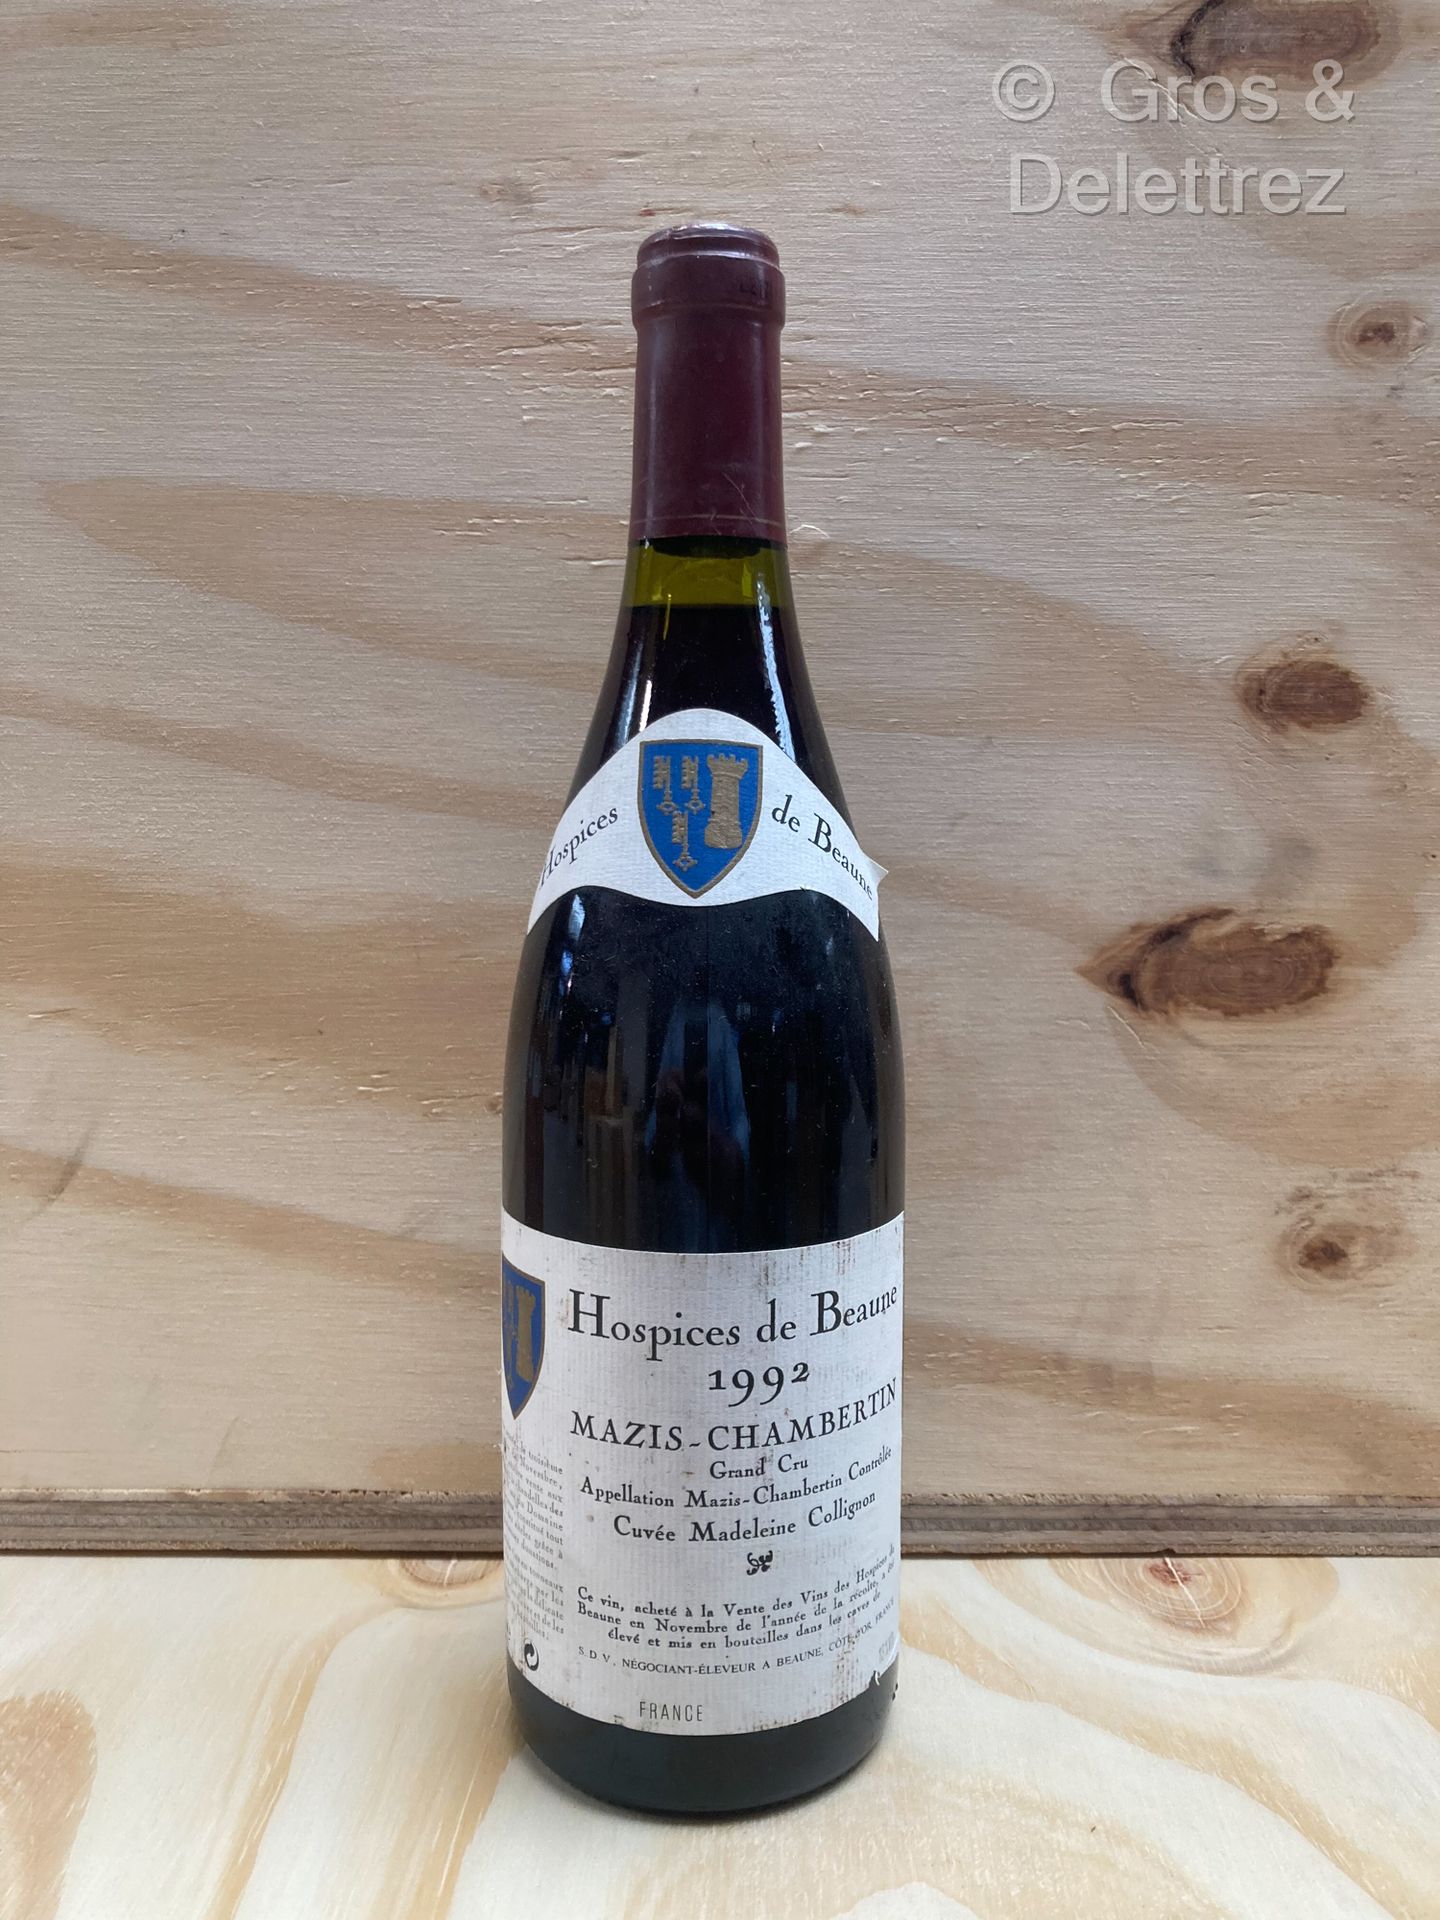 Null Mazis Chambertin Hospices de Beaune cuvée M. Collignon
1992
1 bottle